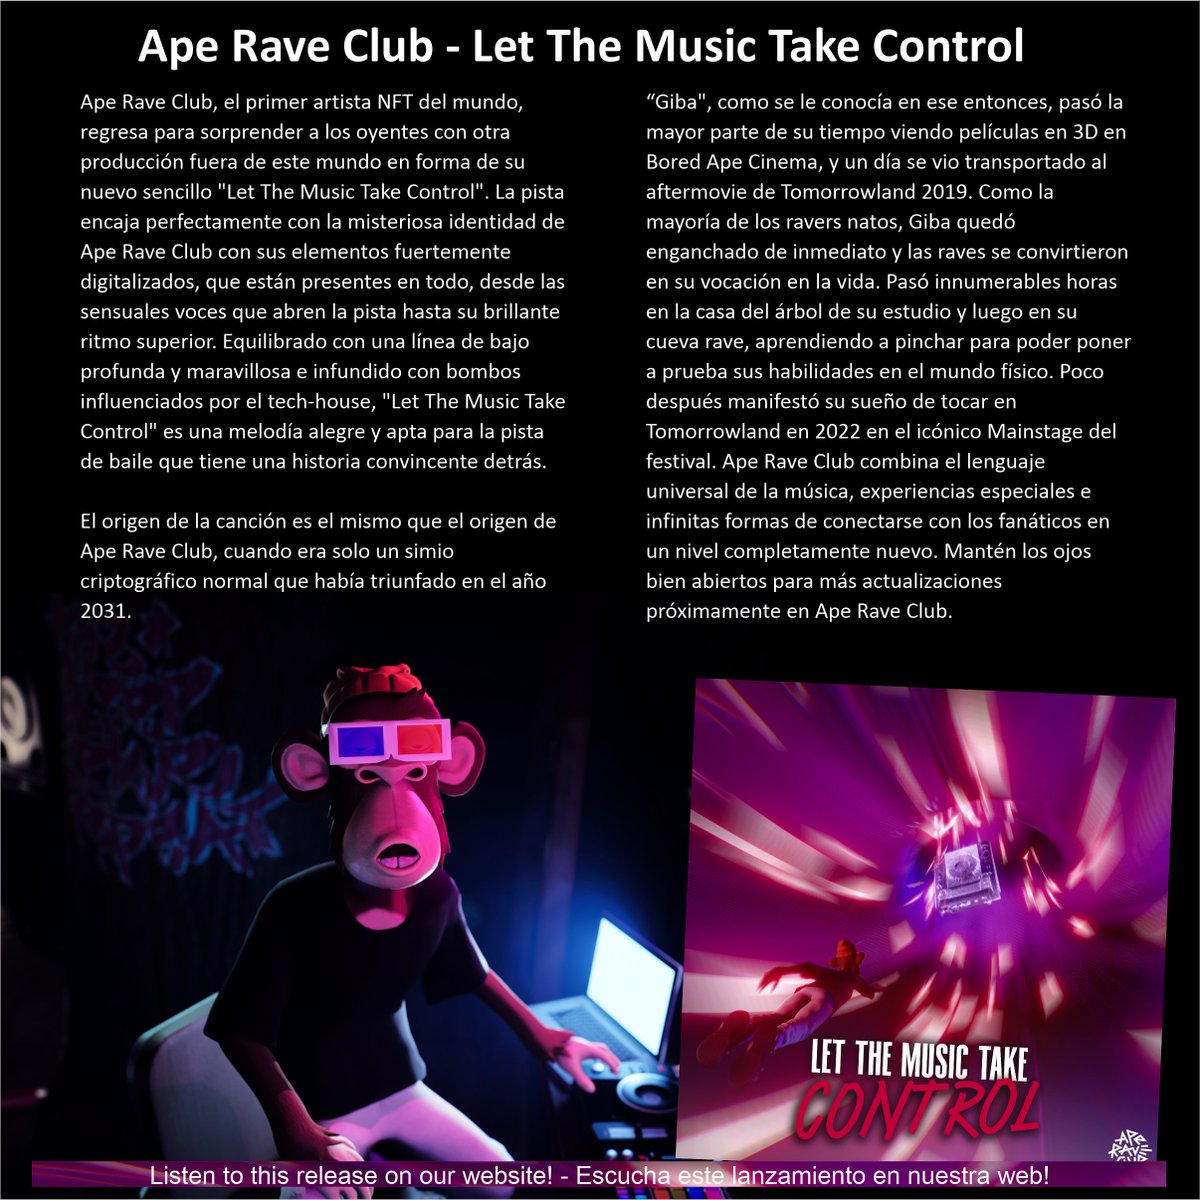 Ape Rave Club - Let The Music Take Control djwmagazine.com/ape-rave-club-…